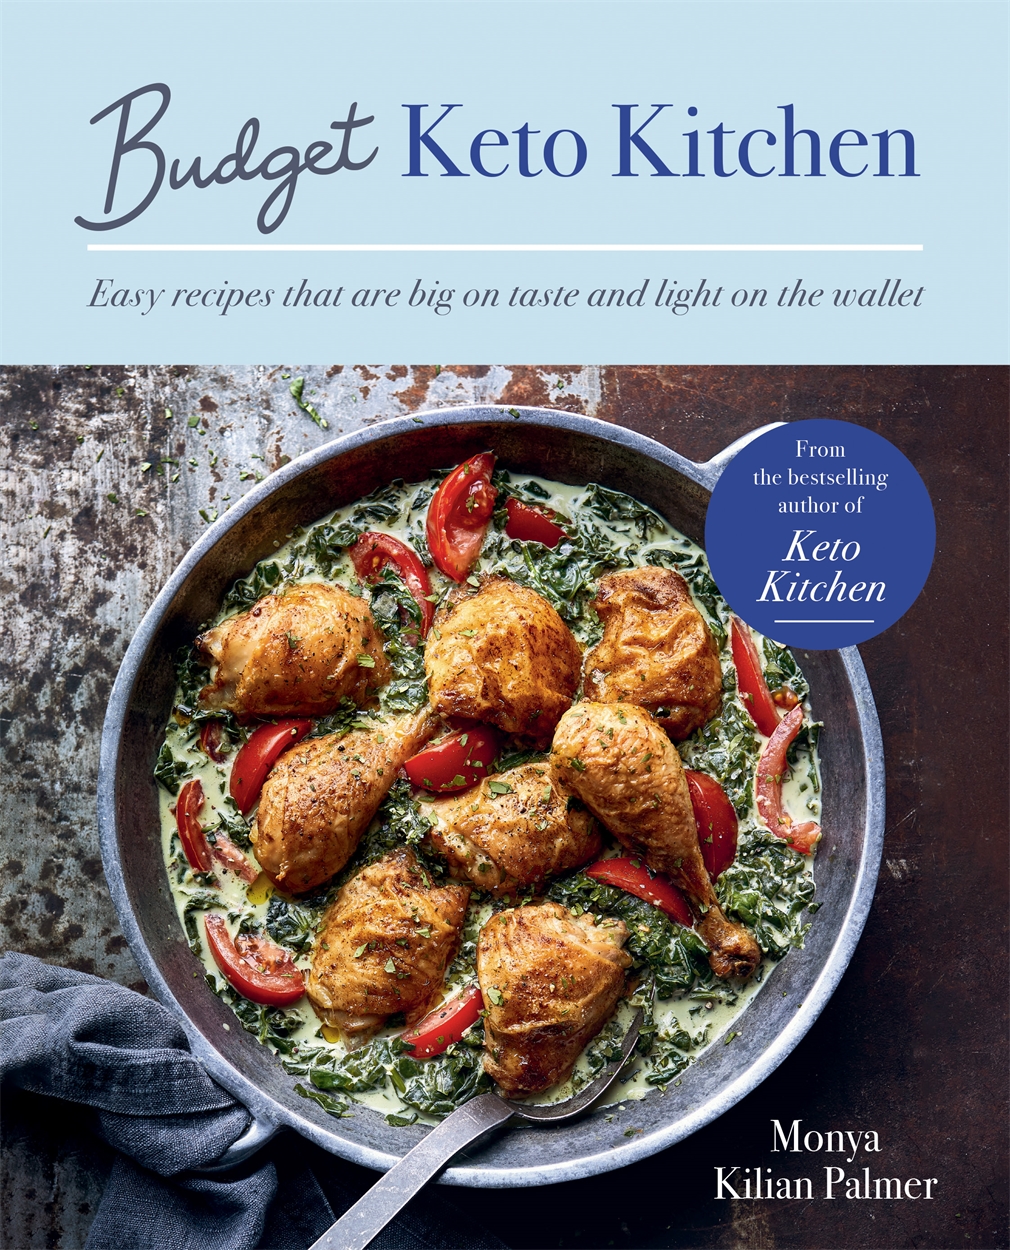 Budget Keto Kitchen by Monya Kilian Palmer | Hachette UK